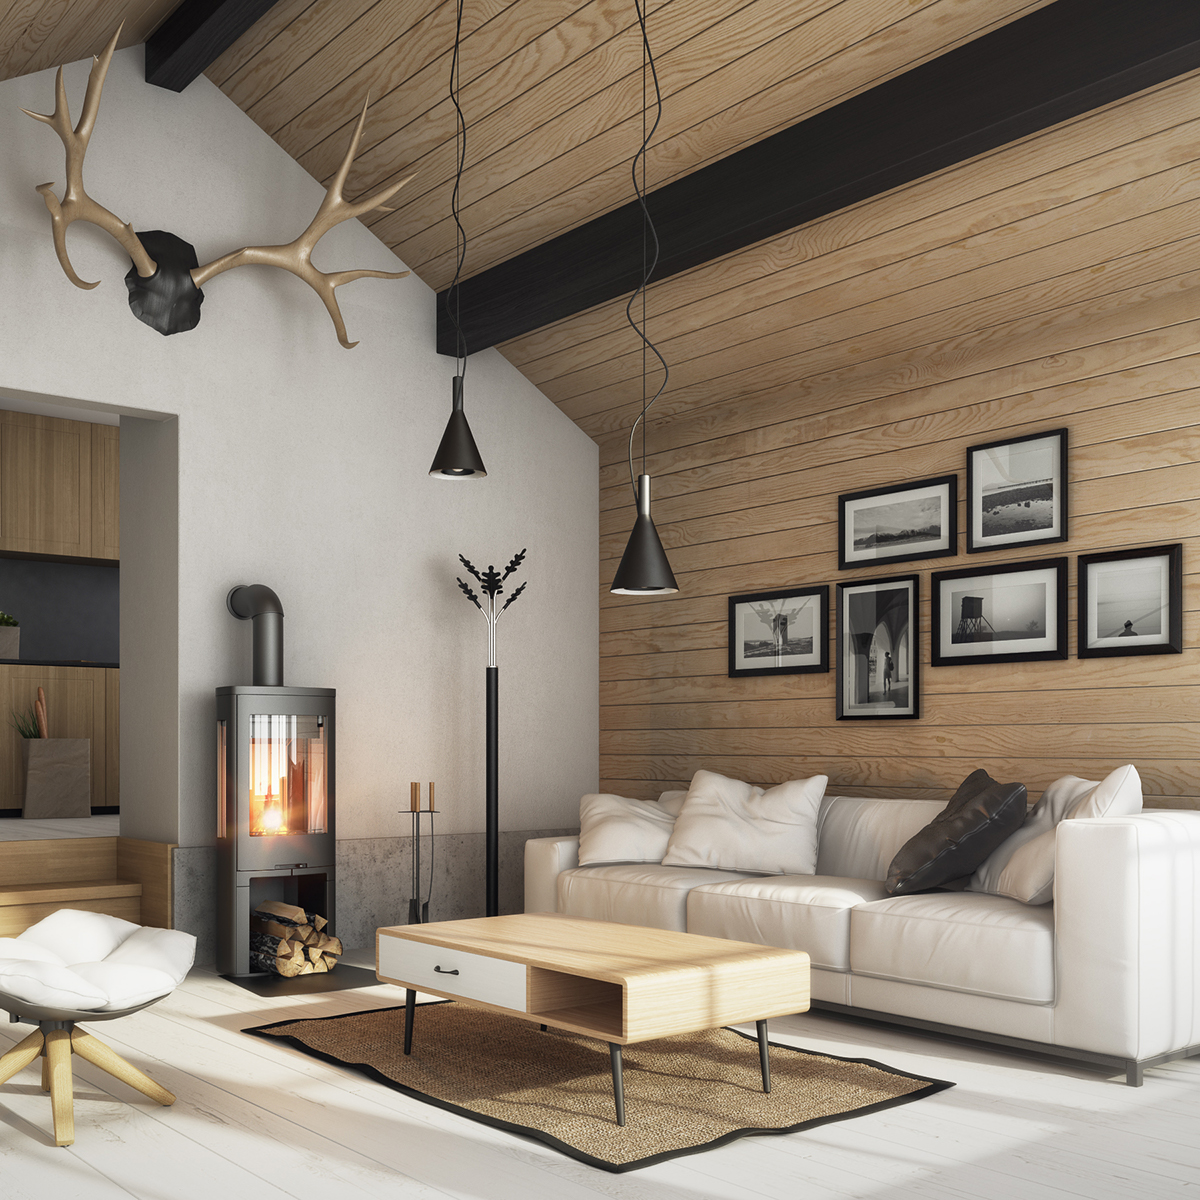 norway norwegian mountain sea cabin Interior exterior wood Scandinavian light fireplace